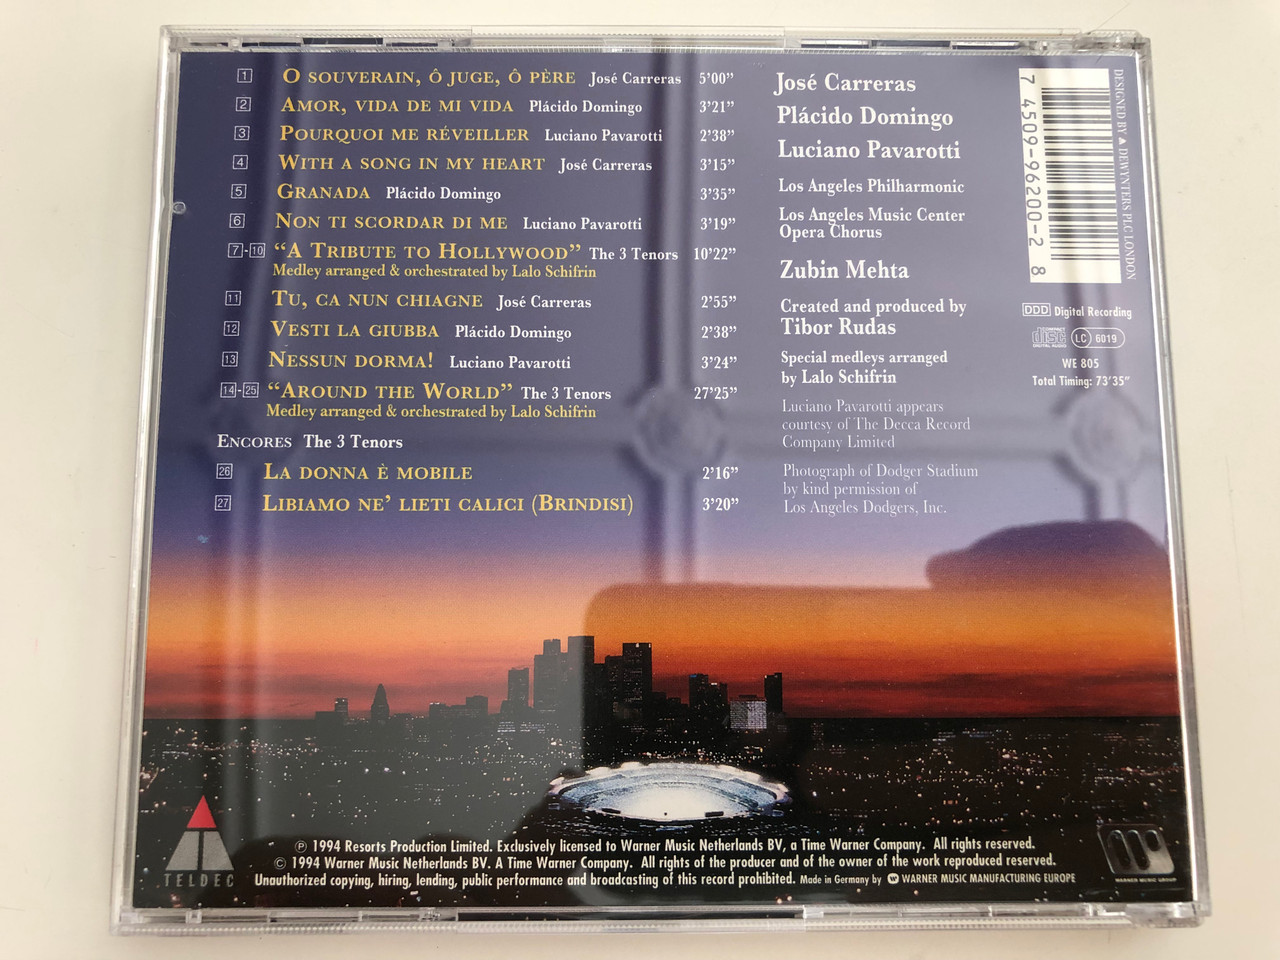 The 3 Tenors in Concert 1994 / Carreras, Domingo, Pavarotti with Mehta /  Audio CD 1994 / Teldec WE 805 - bibleinmylanguage